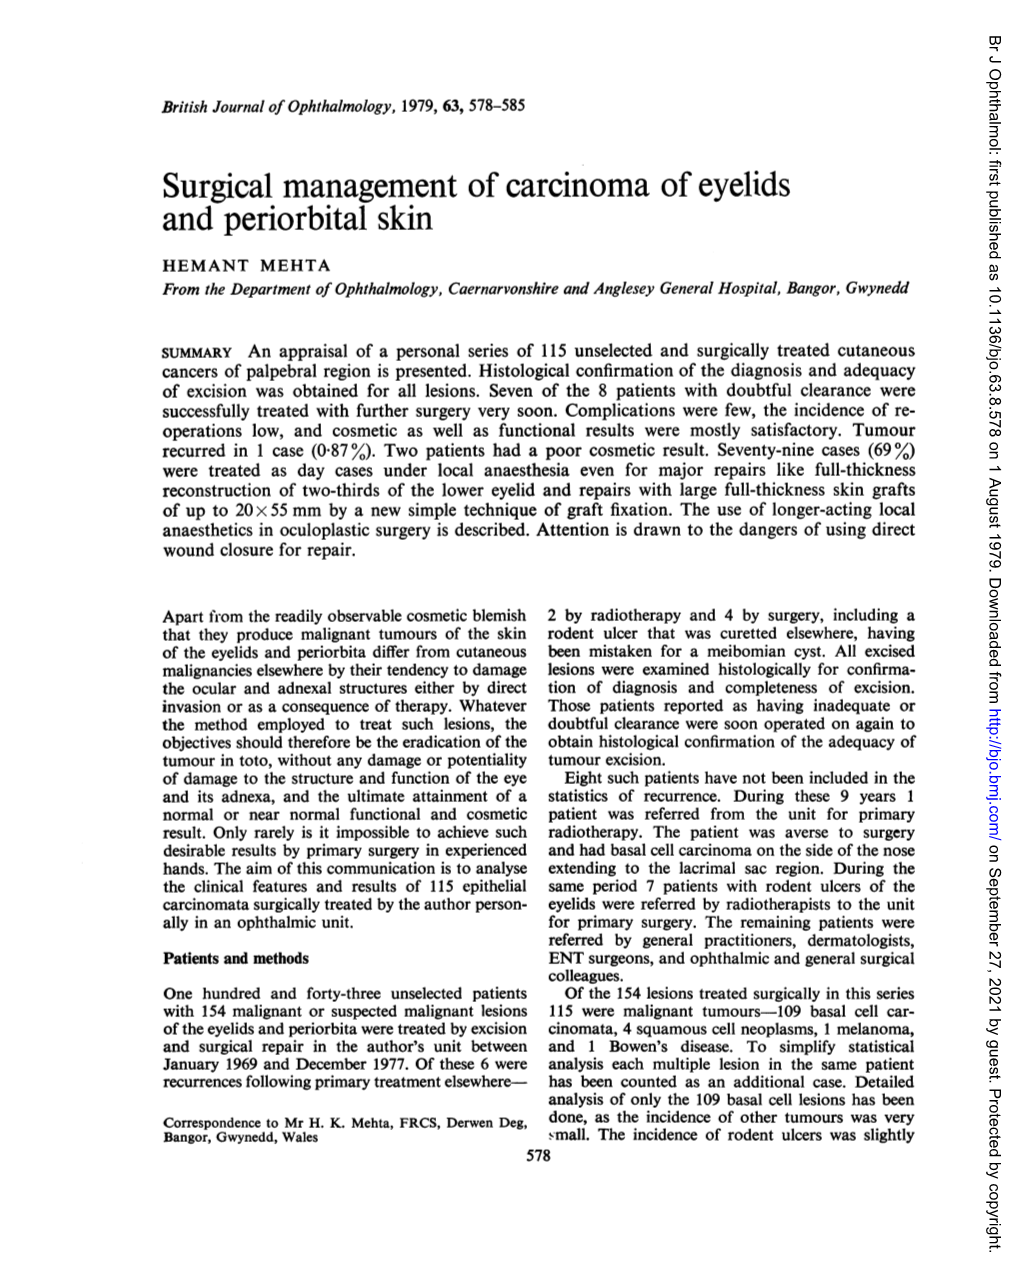 Surgical Management of Carcinoma Ofeyelids and Periorbital Skin